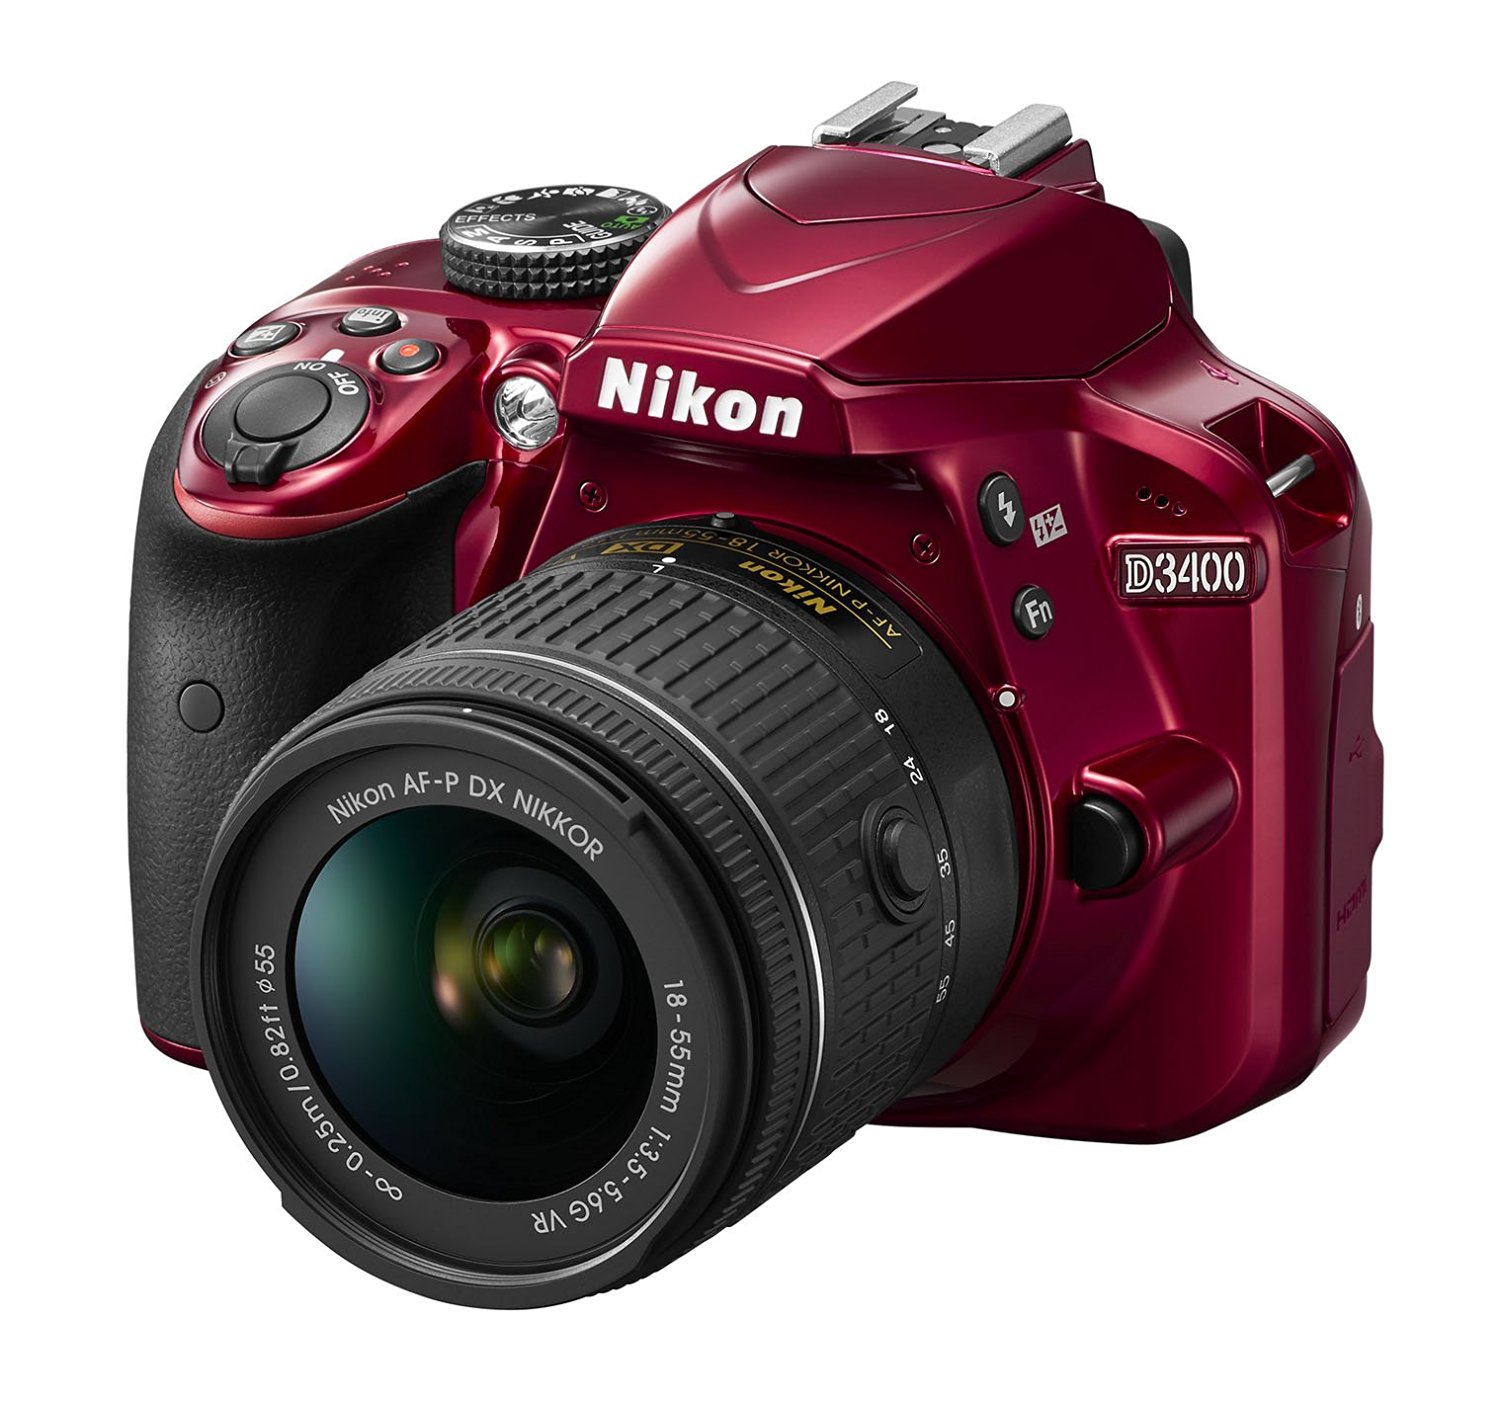 New $150 Instant Rebate on Nikon D3400 w/ 18-55mm Lens Bundle